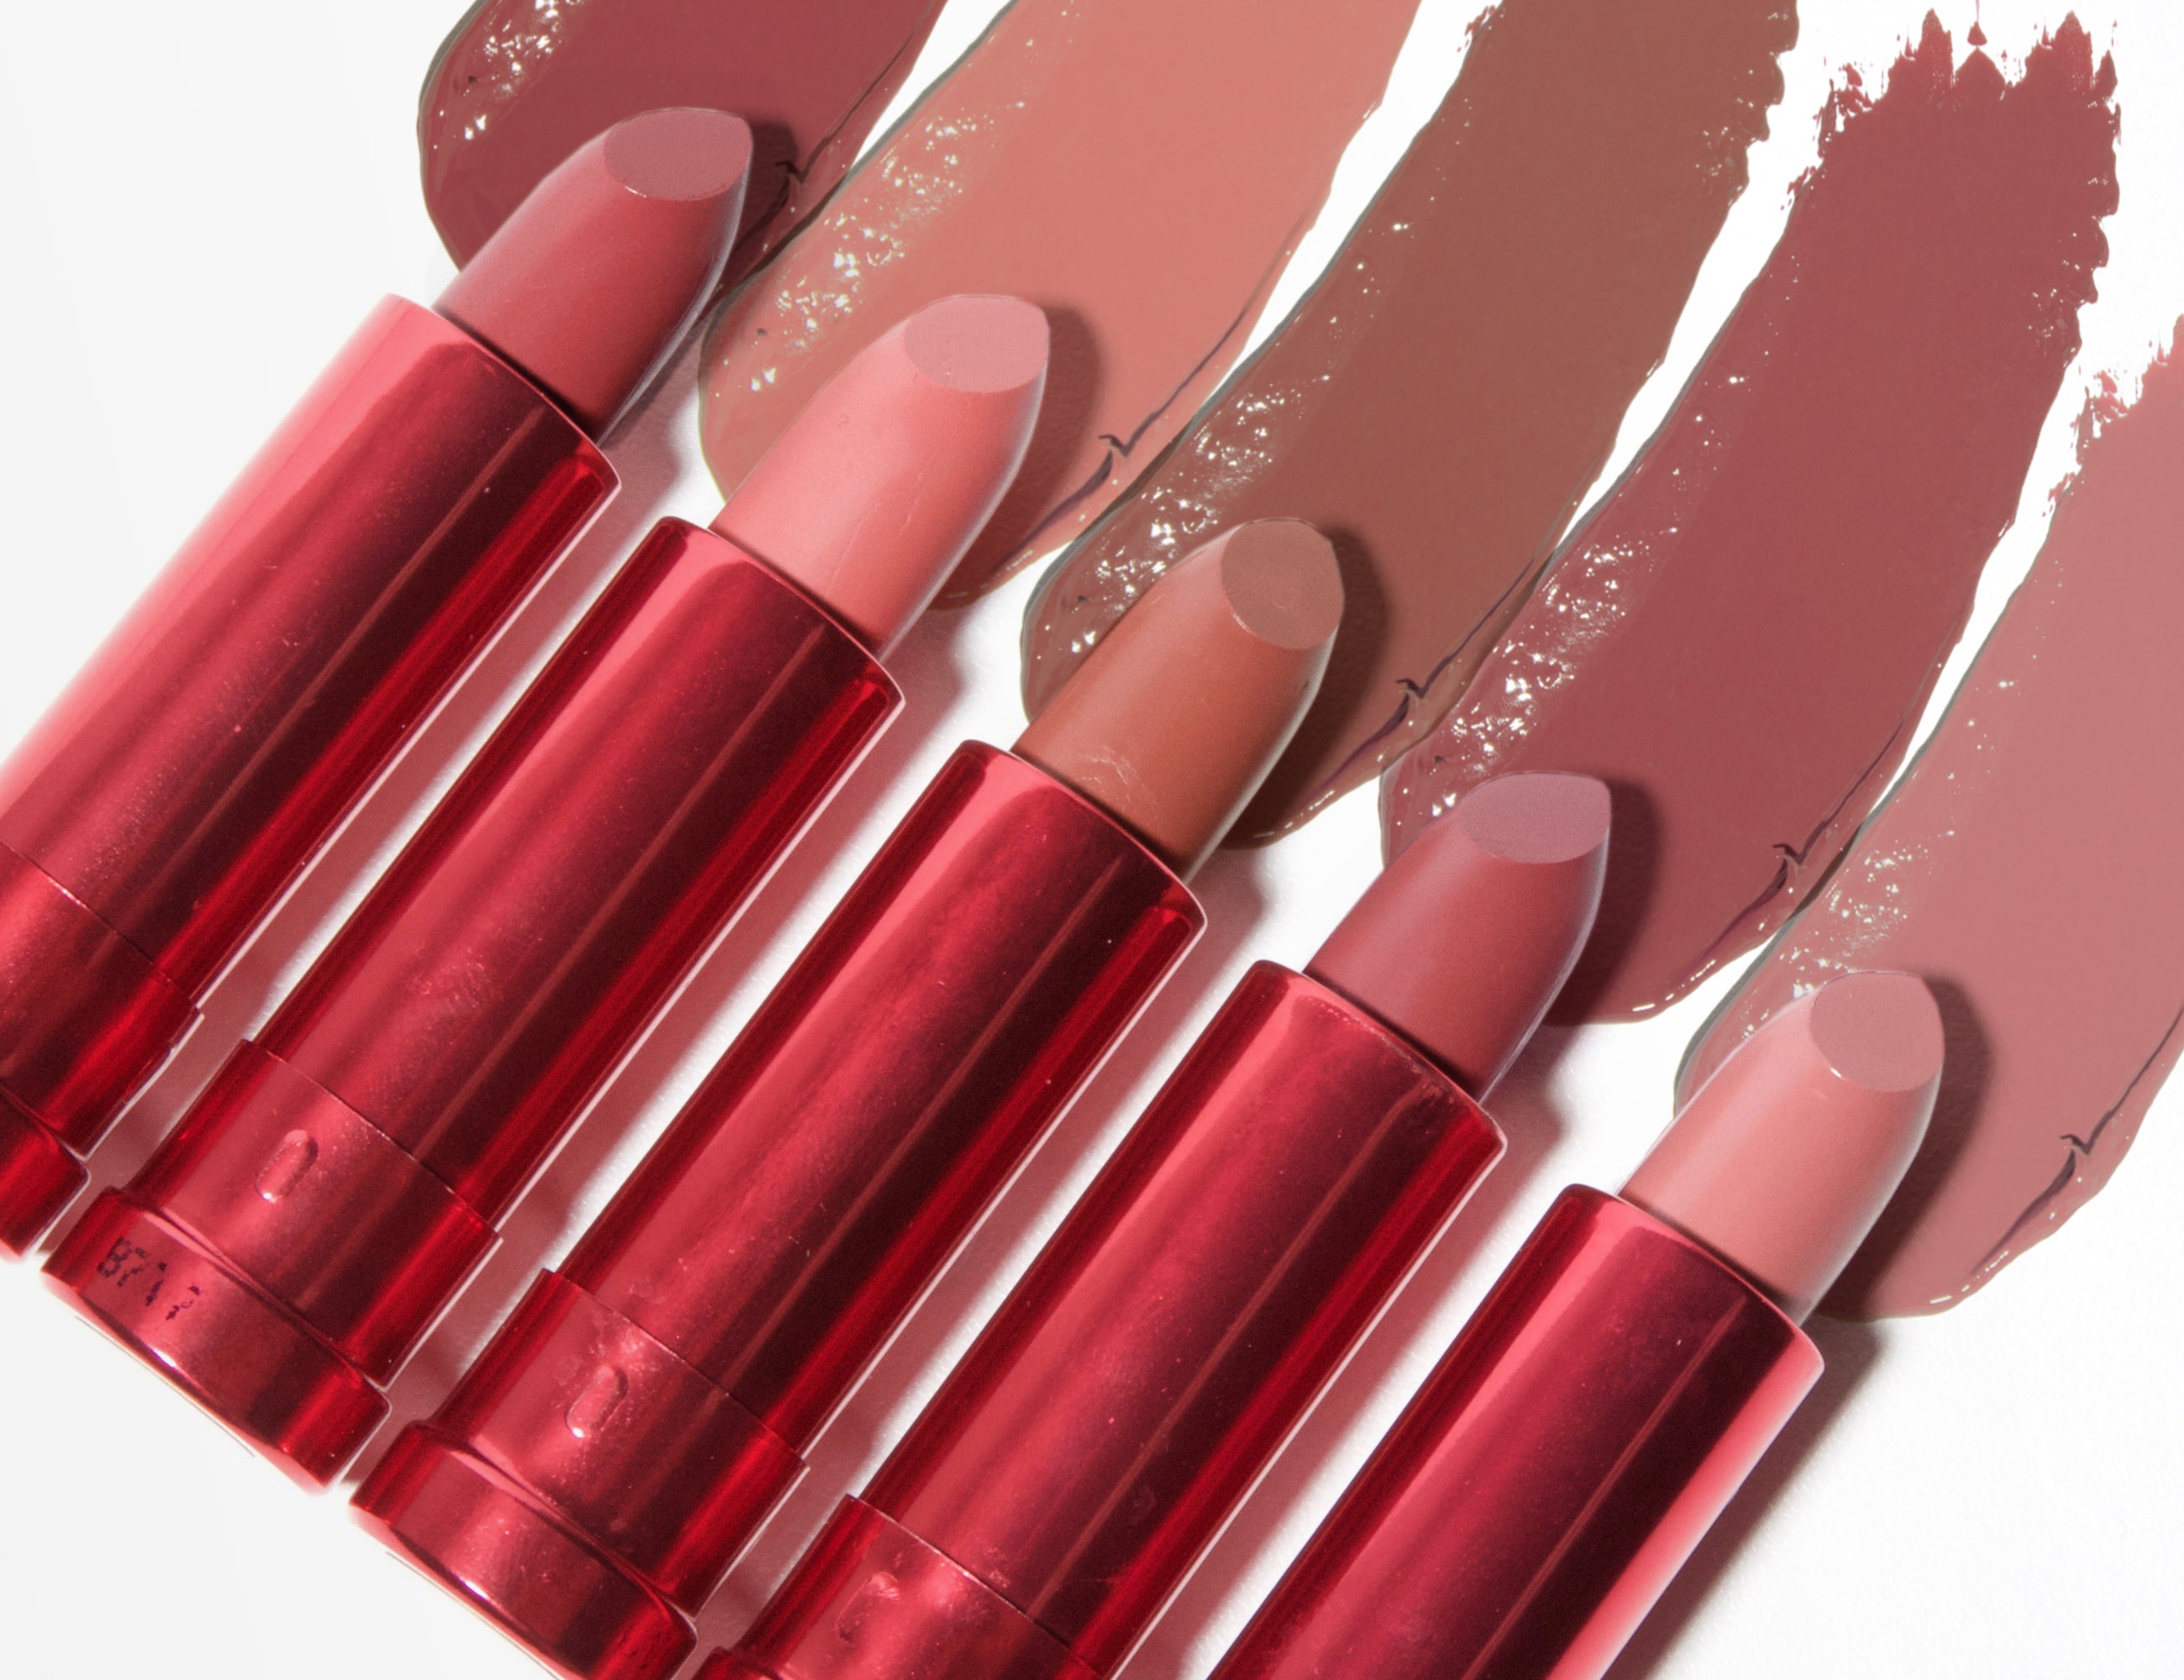 100% PURE Fruit Pigmented Pomegranate Oil Anti Aging Lipsticks Shades